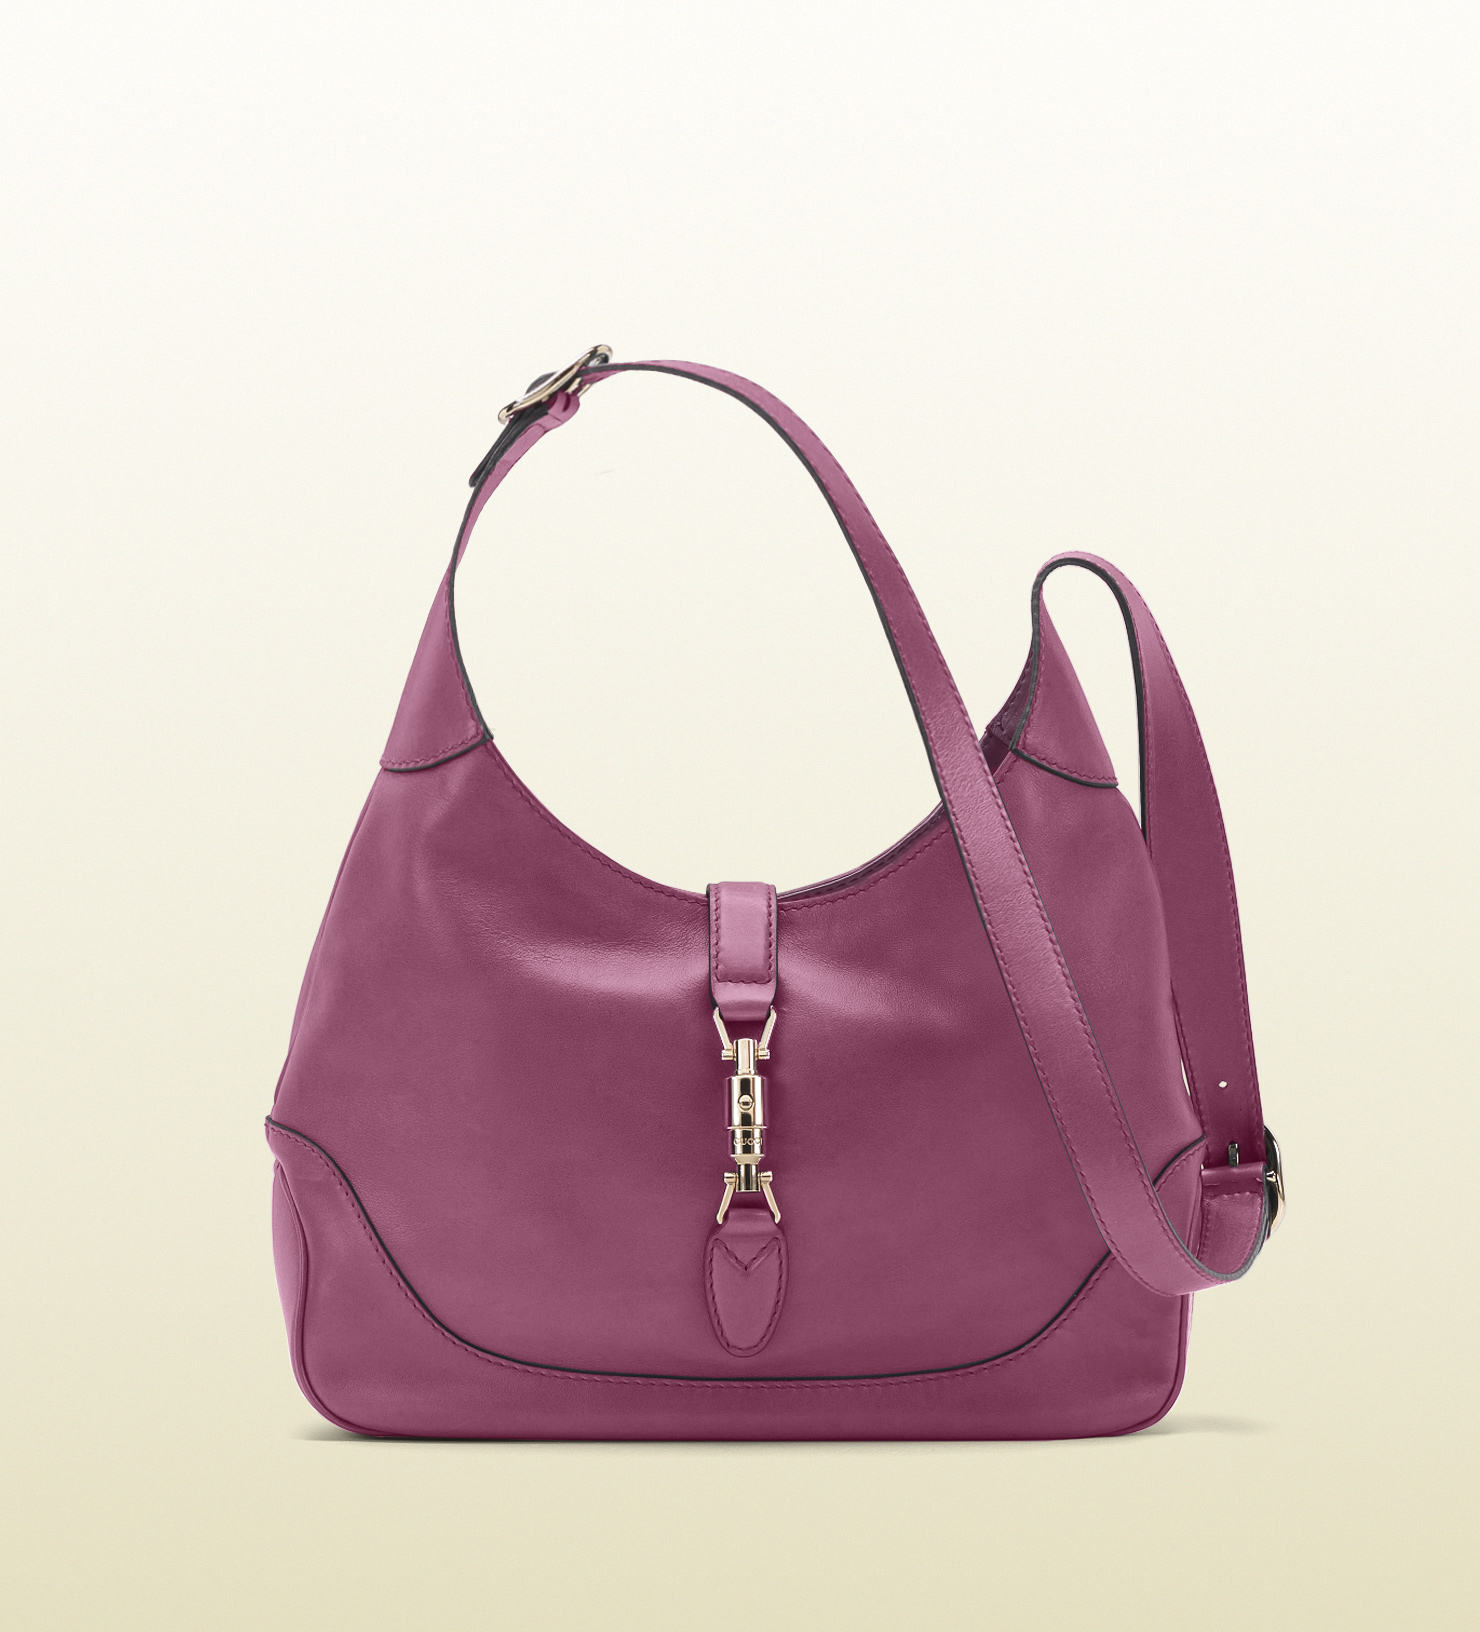 Lyst - Gucci Jackie Leather Shoulder Bag in Pink